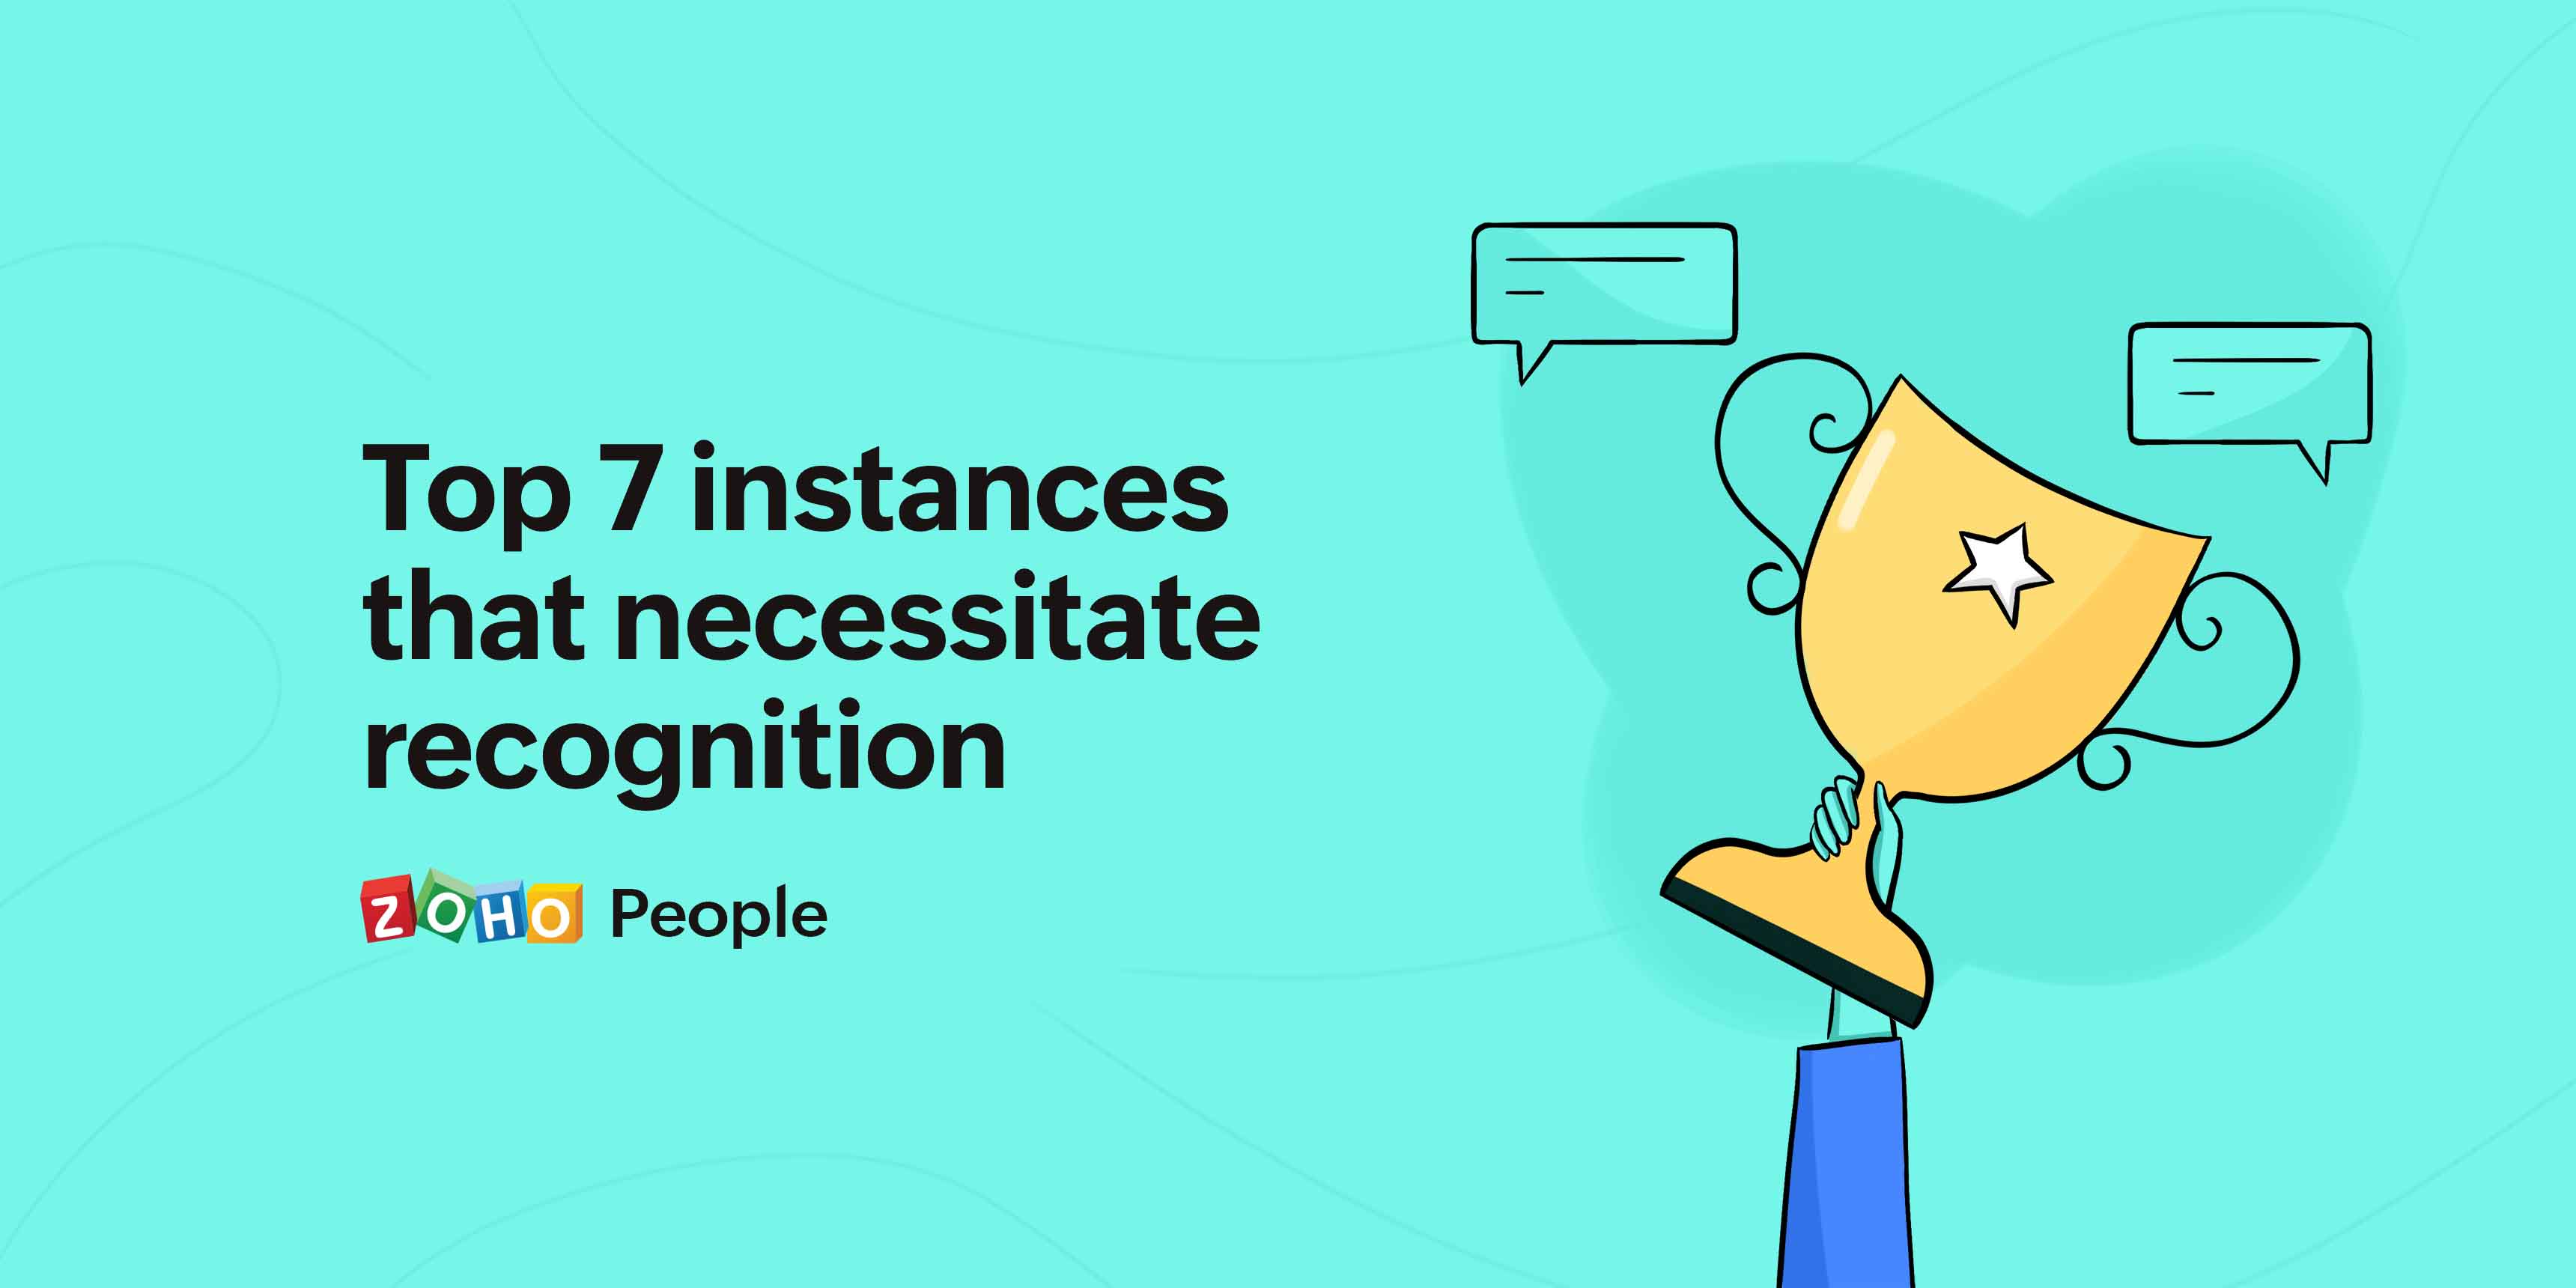 Top 7 instances that necessitate recognition